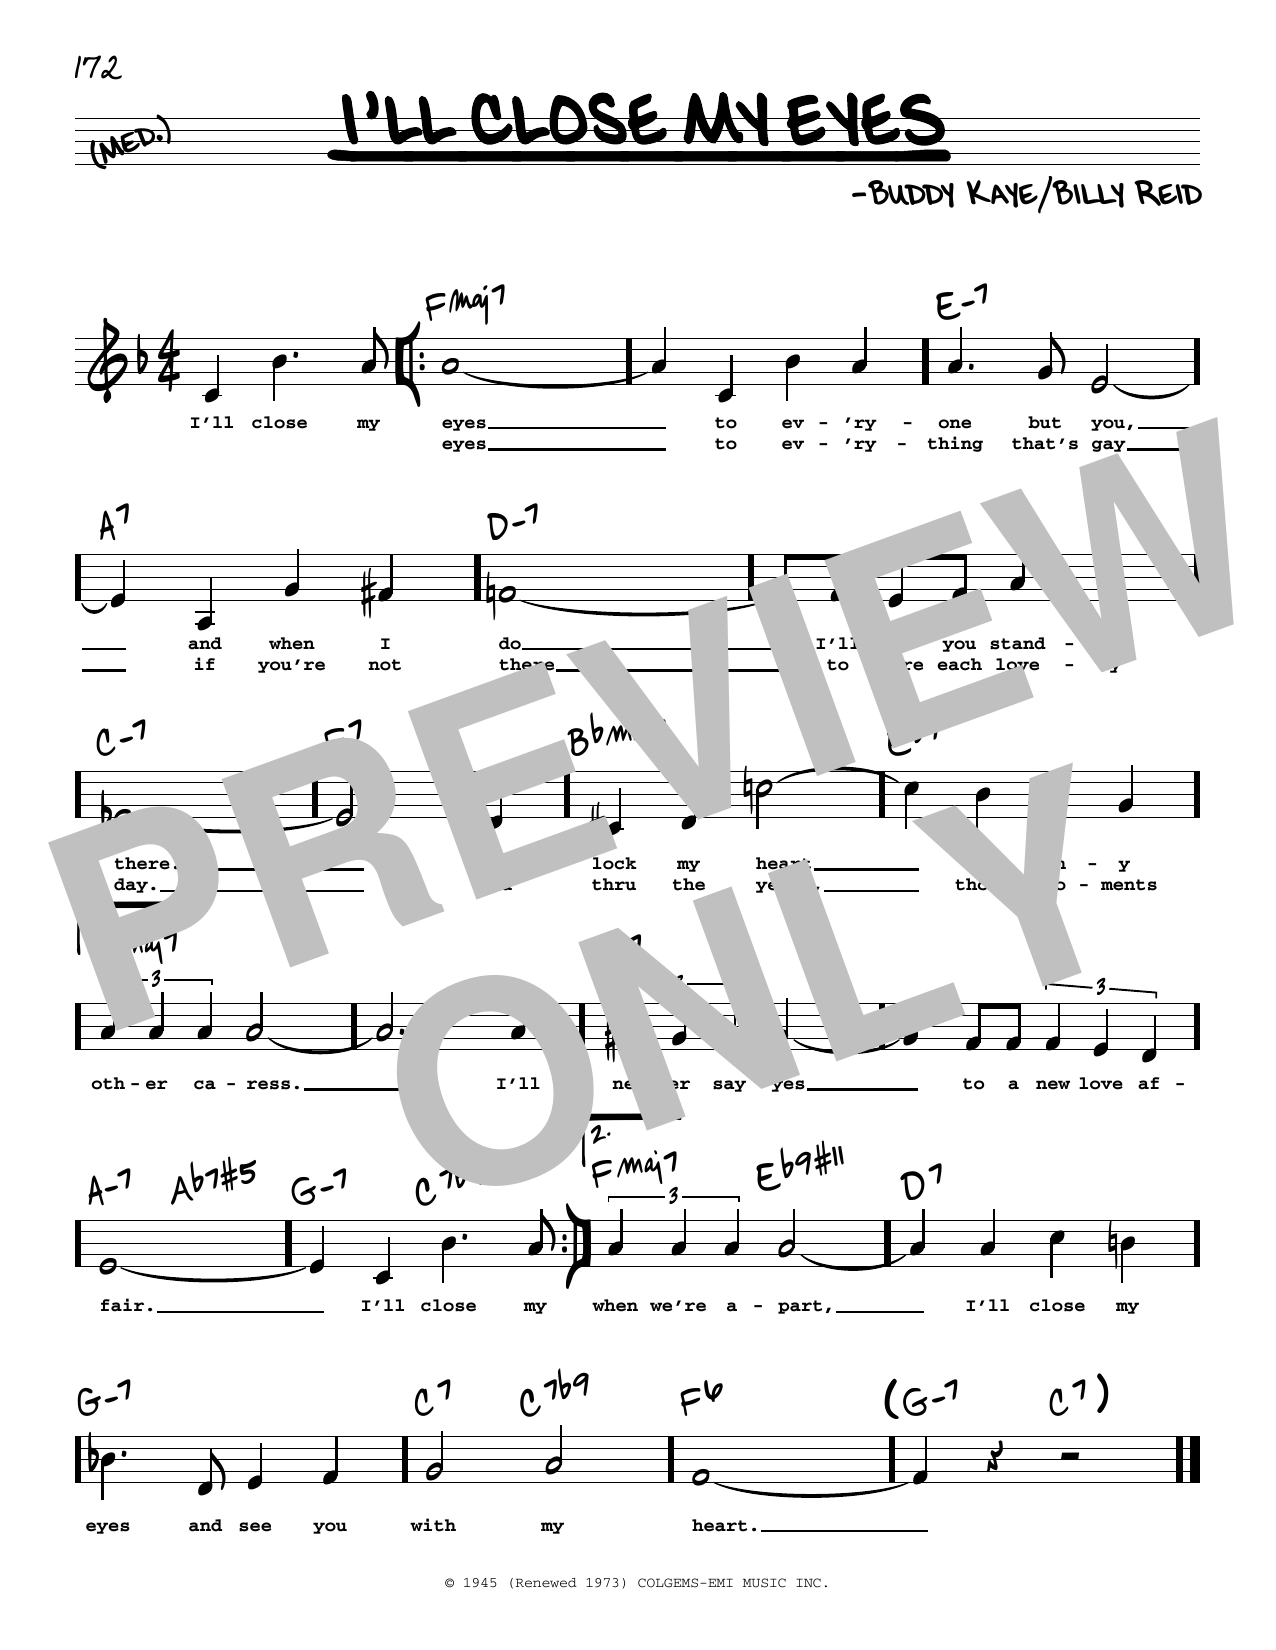 Buddy Kaye I'll Close My Eyes (Low Voice) Sheet Music Notes & Chords for Real Book – Melody, Lyrics & Chords - Download or Print PDF